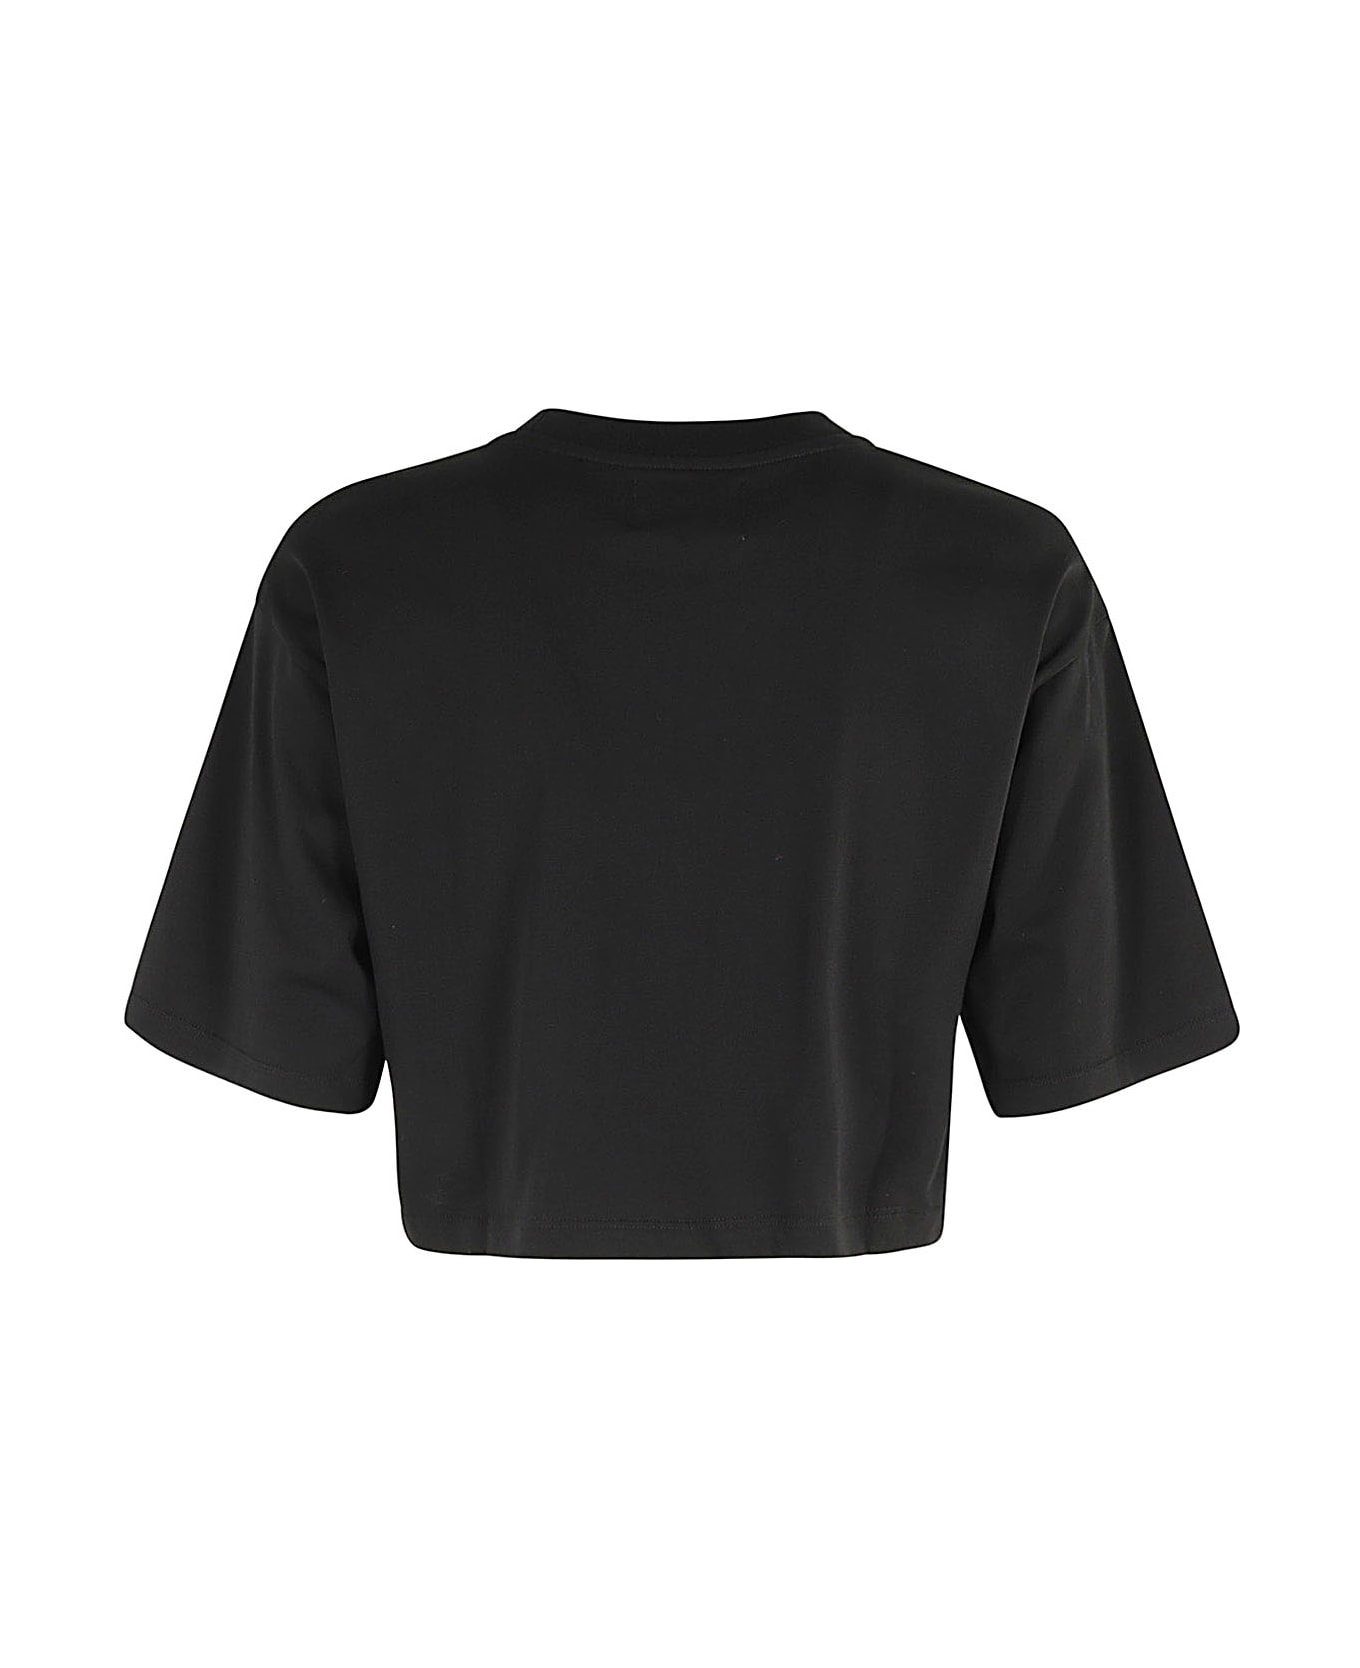 Loulou Studio Cropped Tshirt - Black